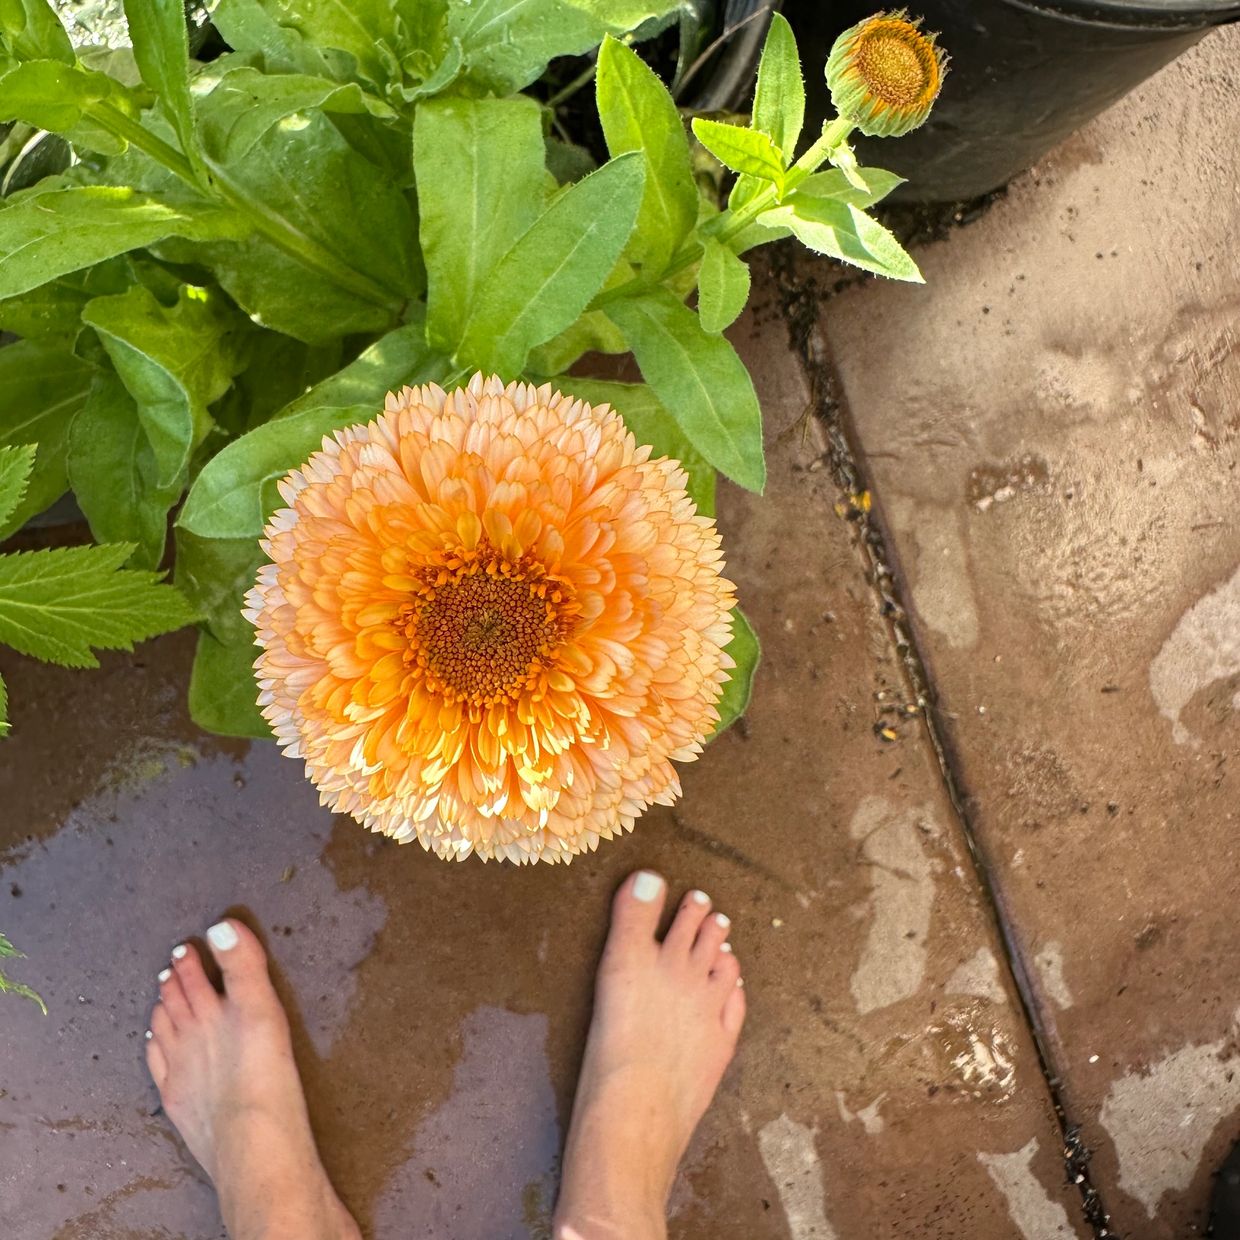 Giant calendula flower compared to someone’s feet